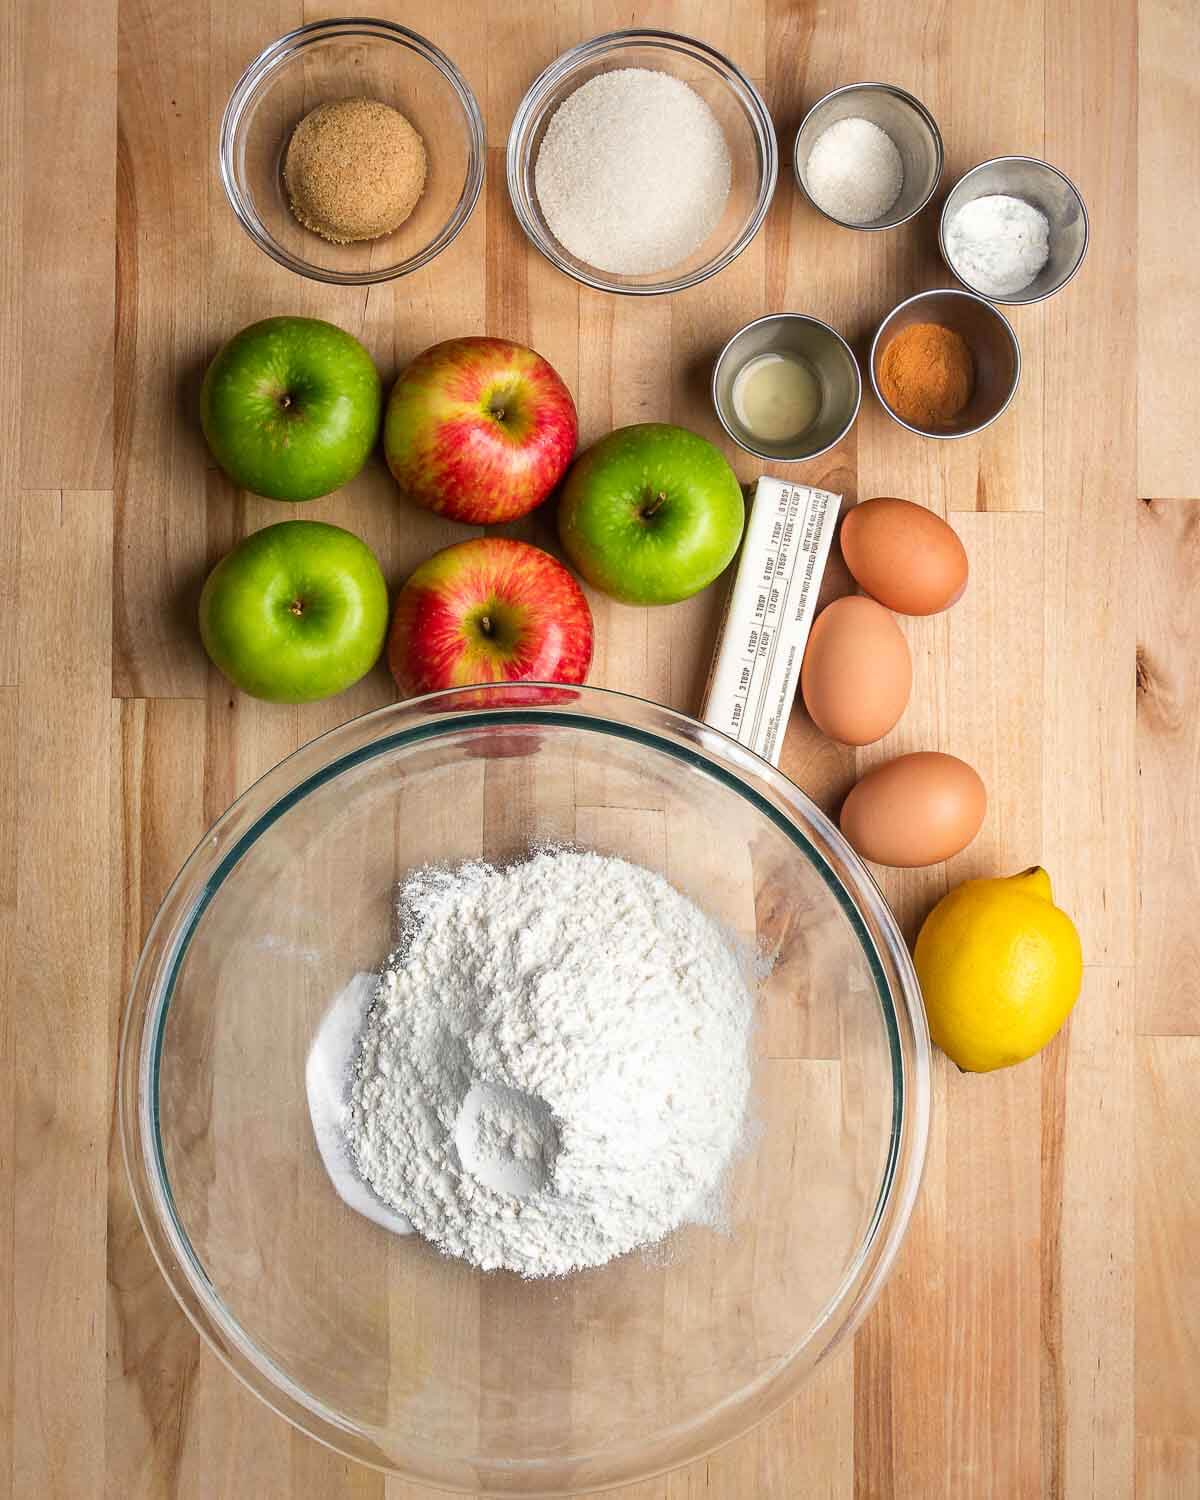 Ingredients shown: brown sugar, sugar, cinnamon, baking powder, baking soda, vanilla extract, apples, eggs, butter, lemon, and flour.